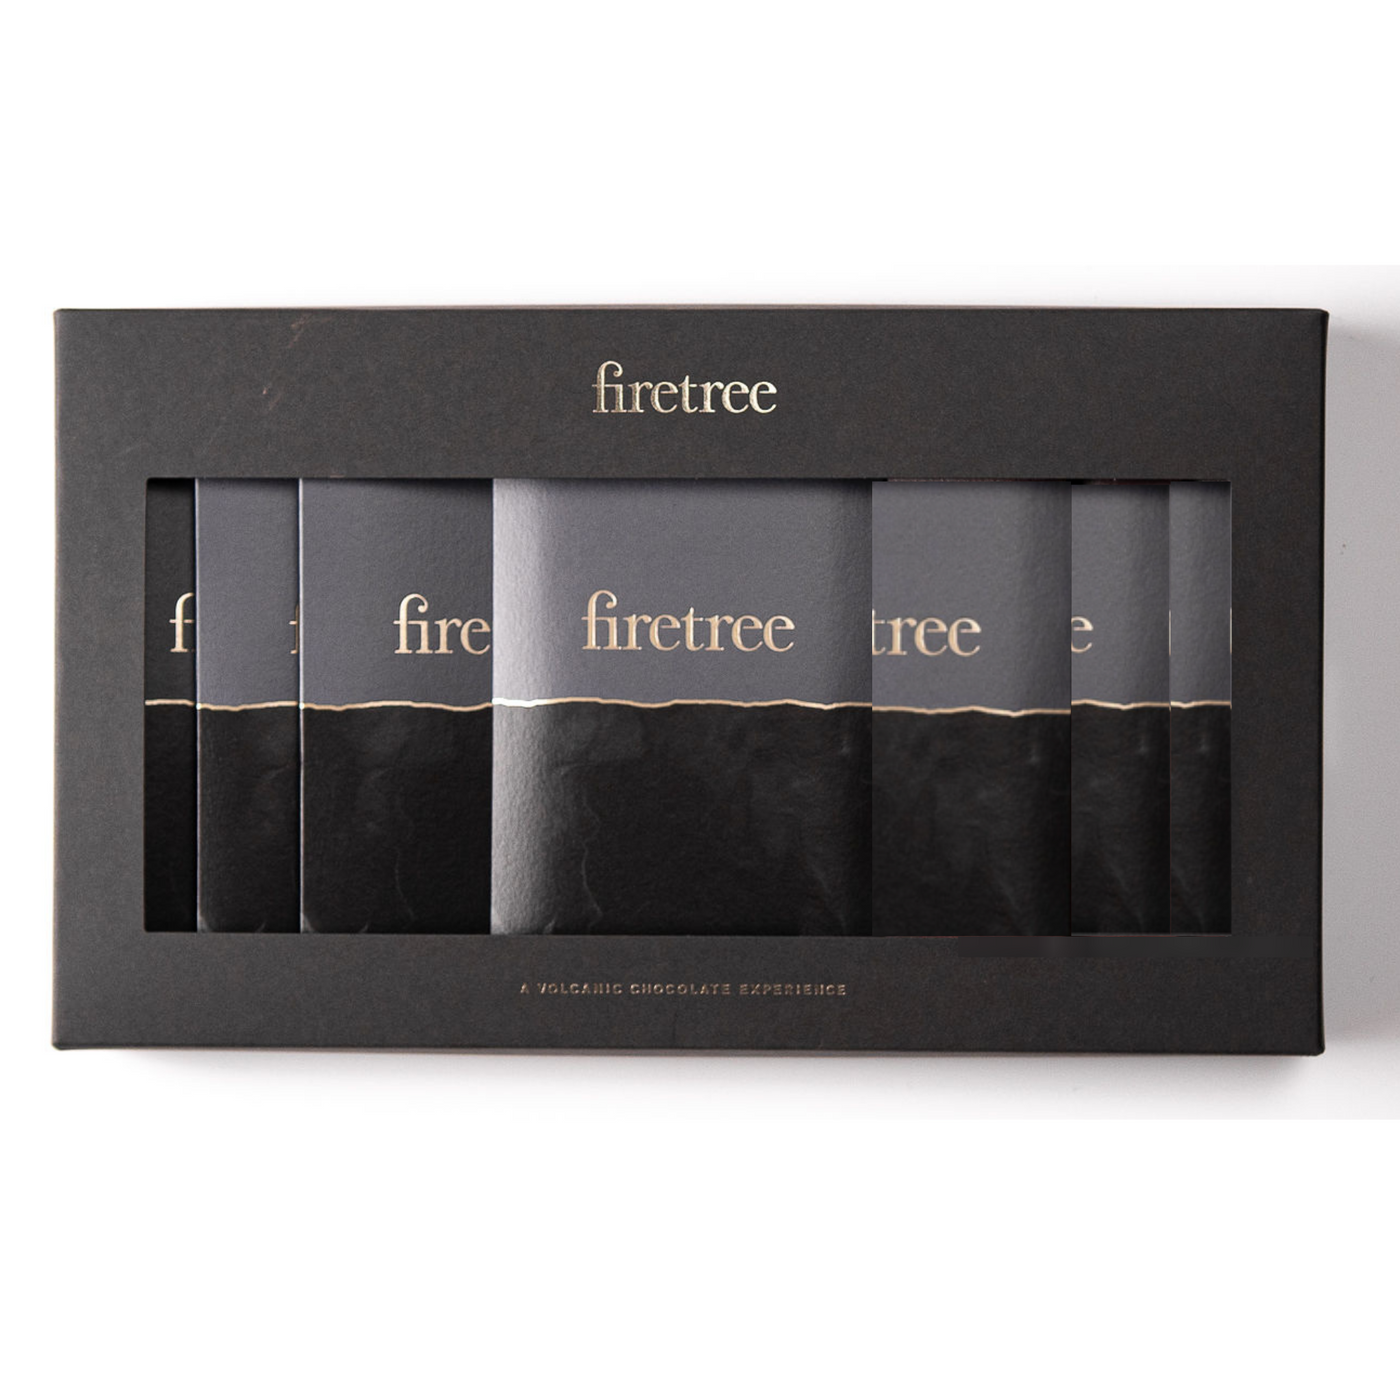 The Firetree 100% Gift Box